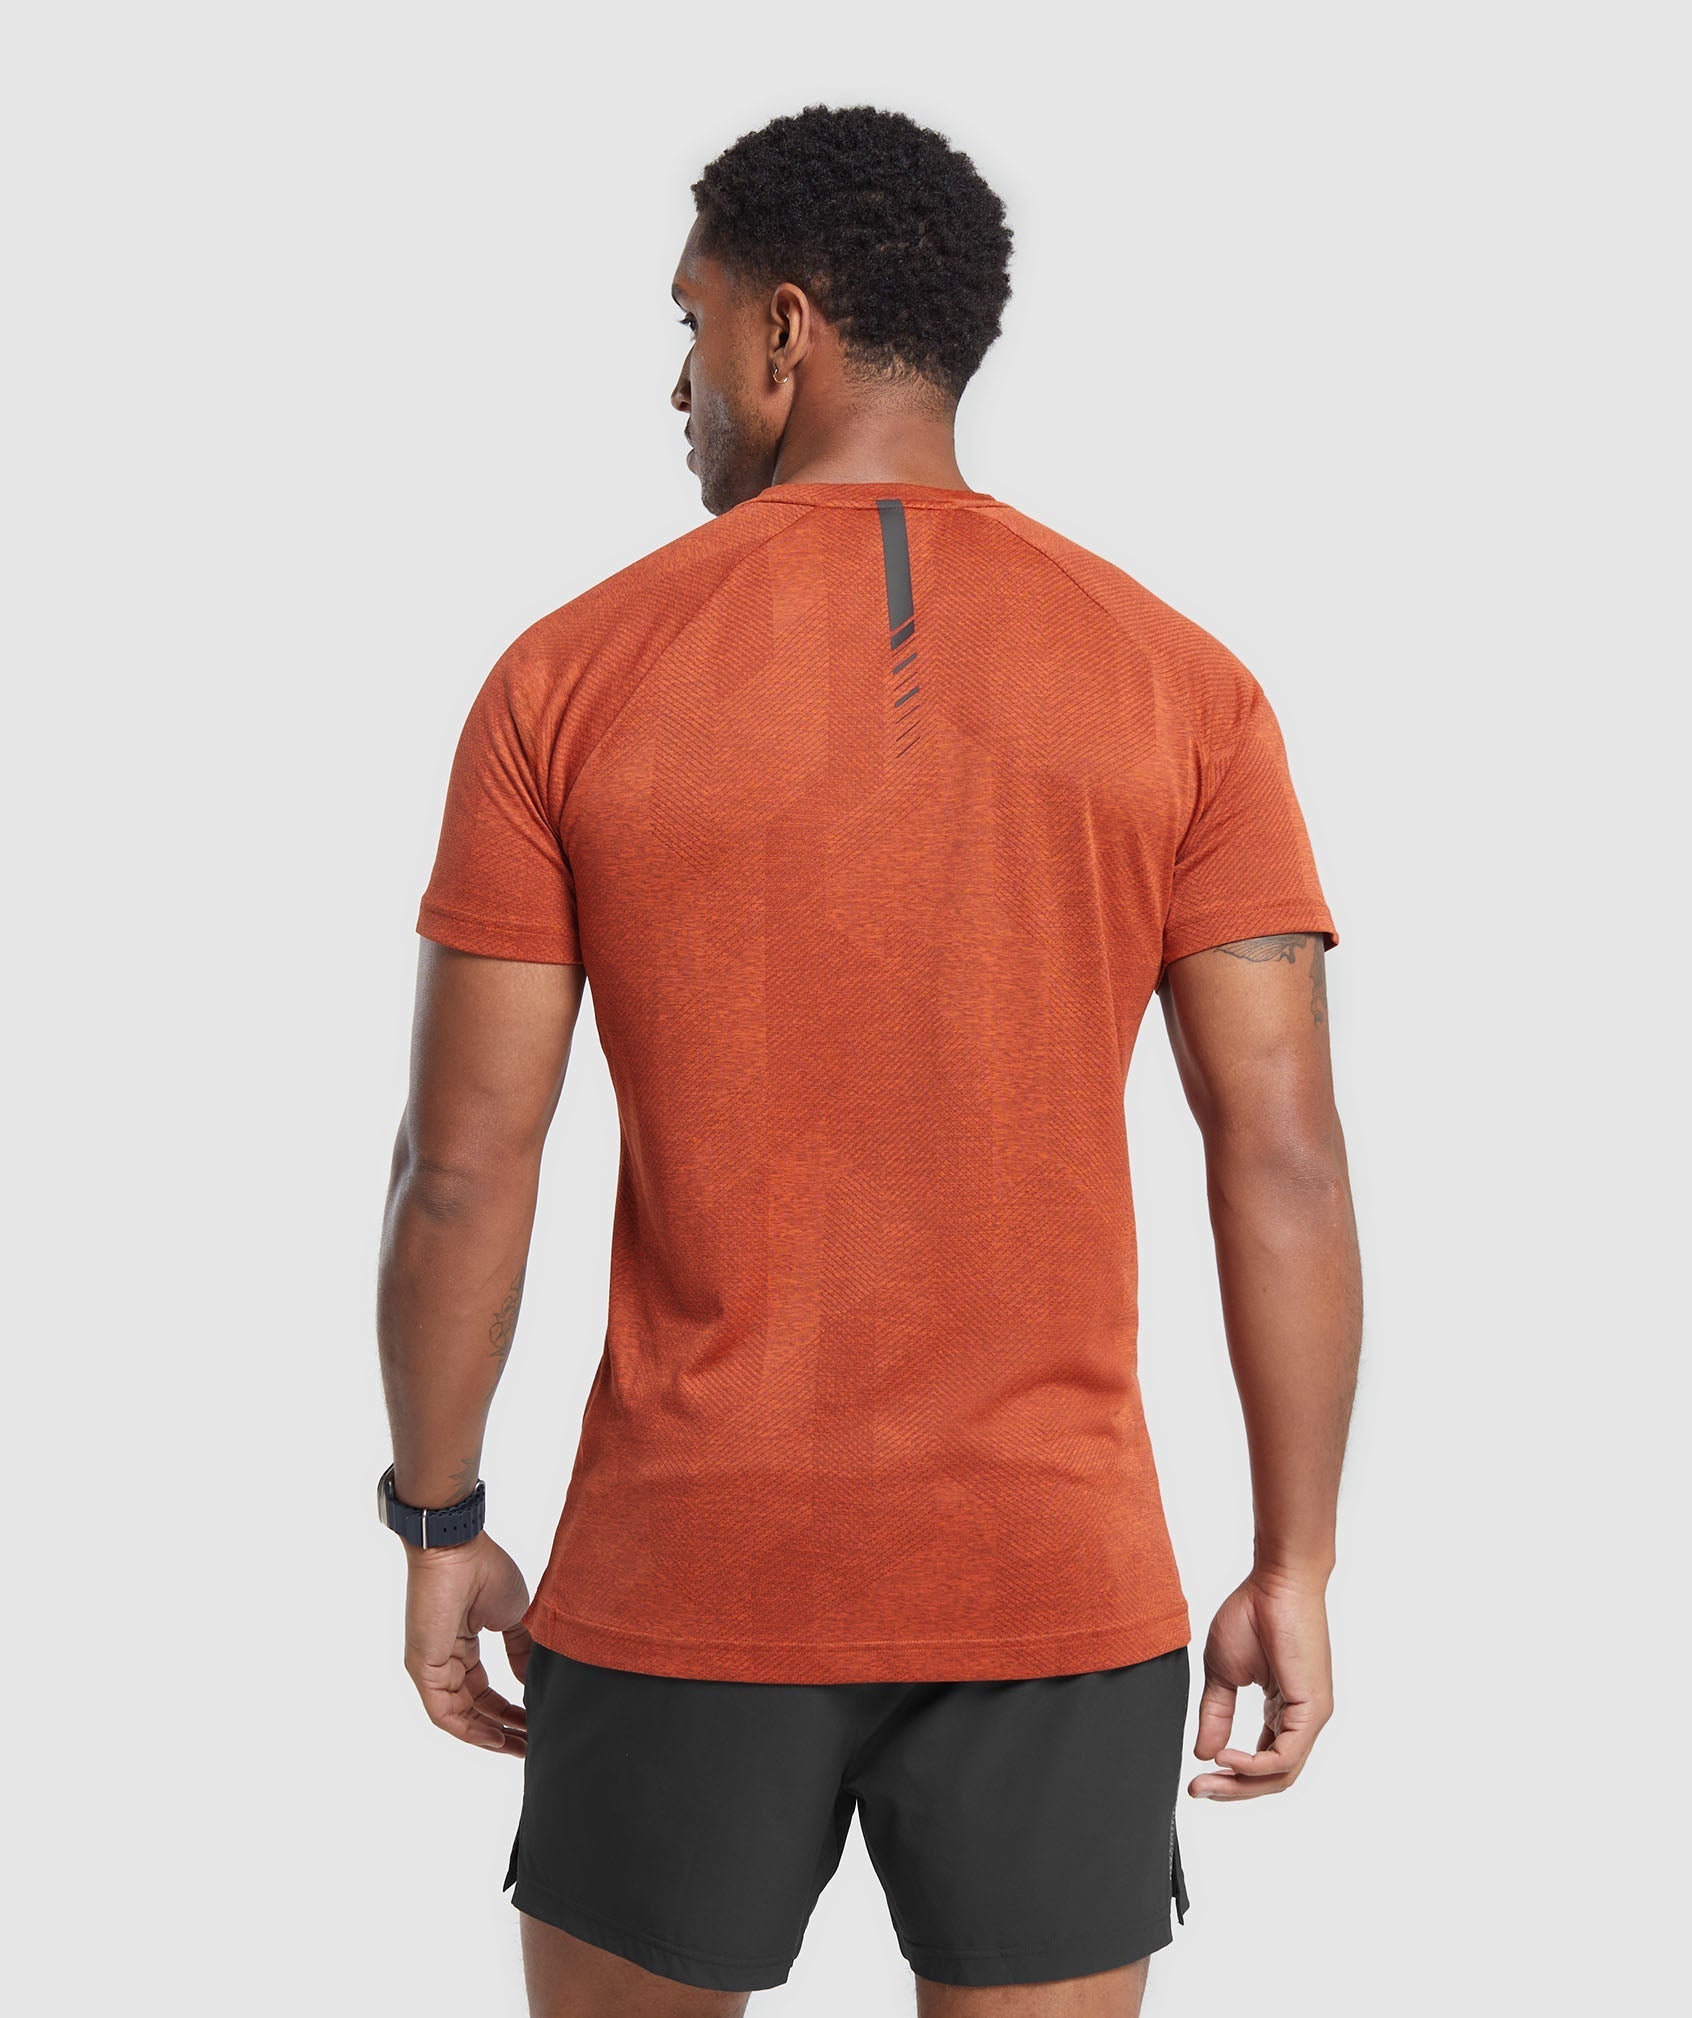 Apex T-Shirt in Rust Orange/Rust Brown - view 2